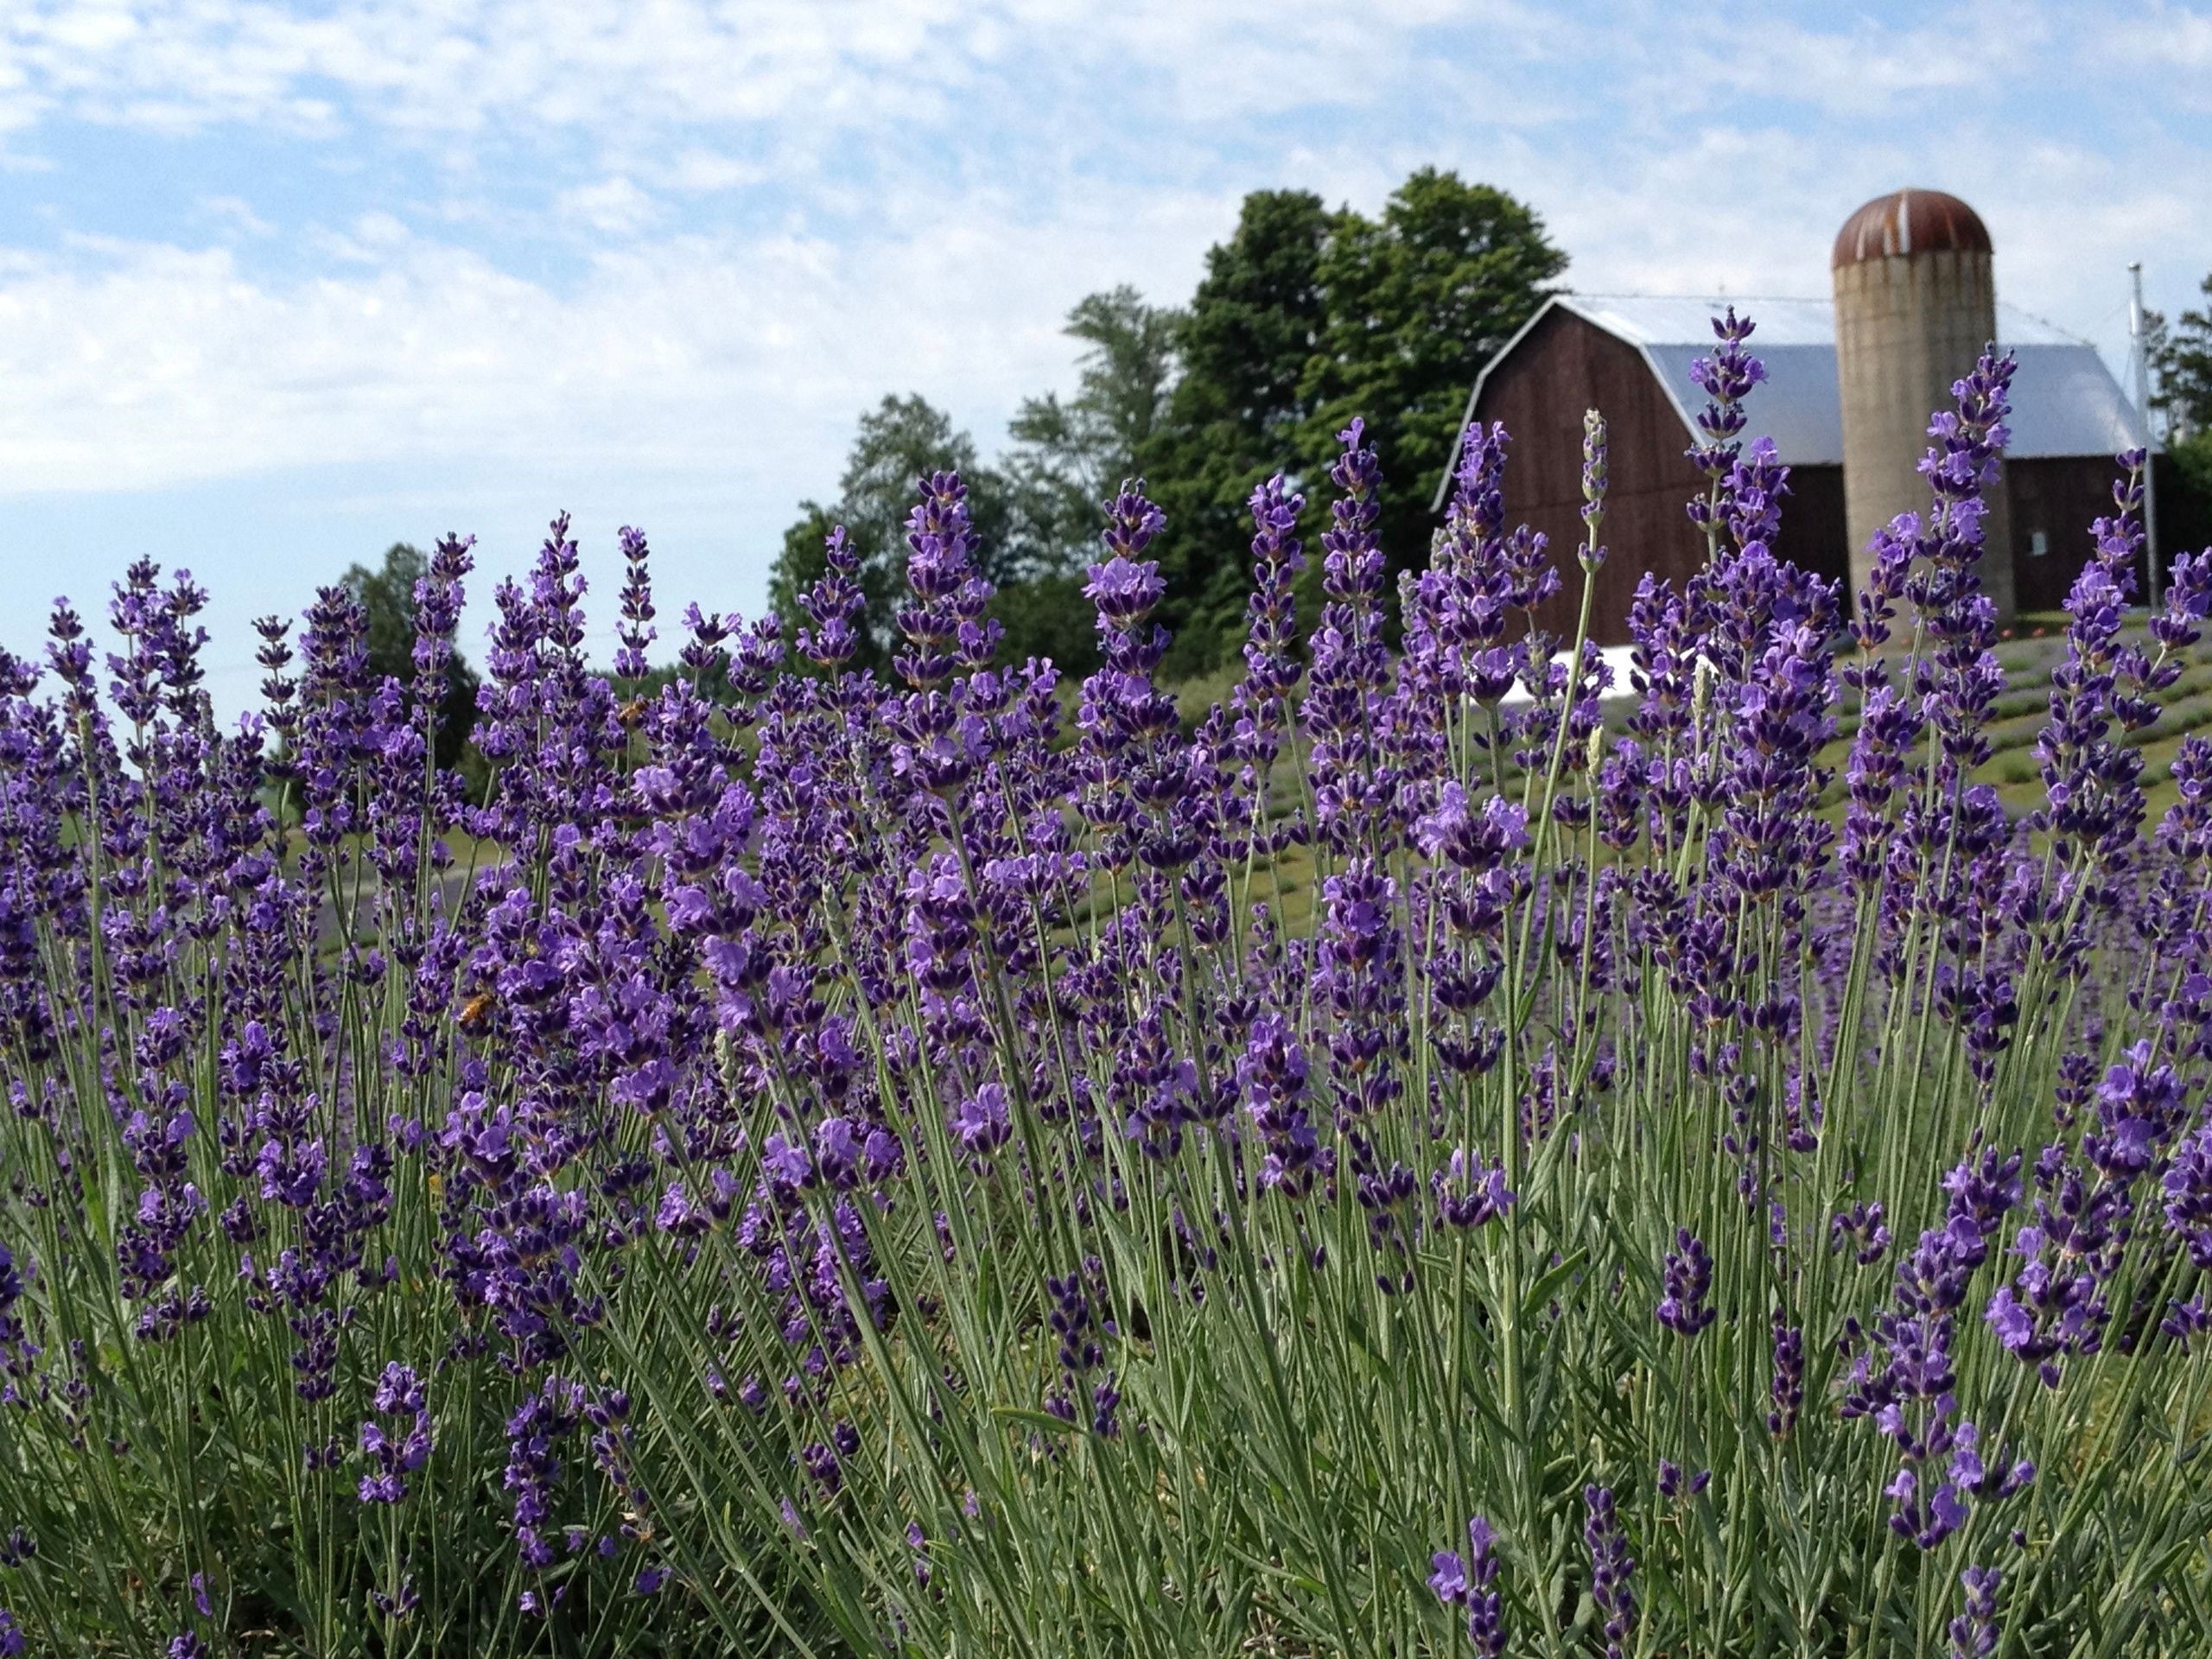 Apple Hill Lavender Farm